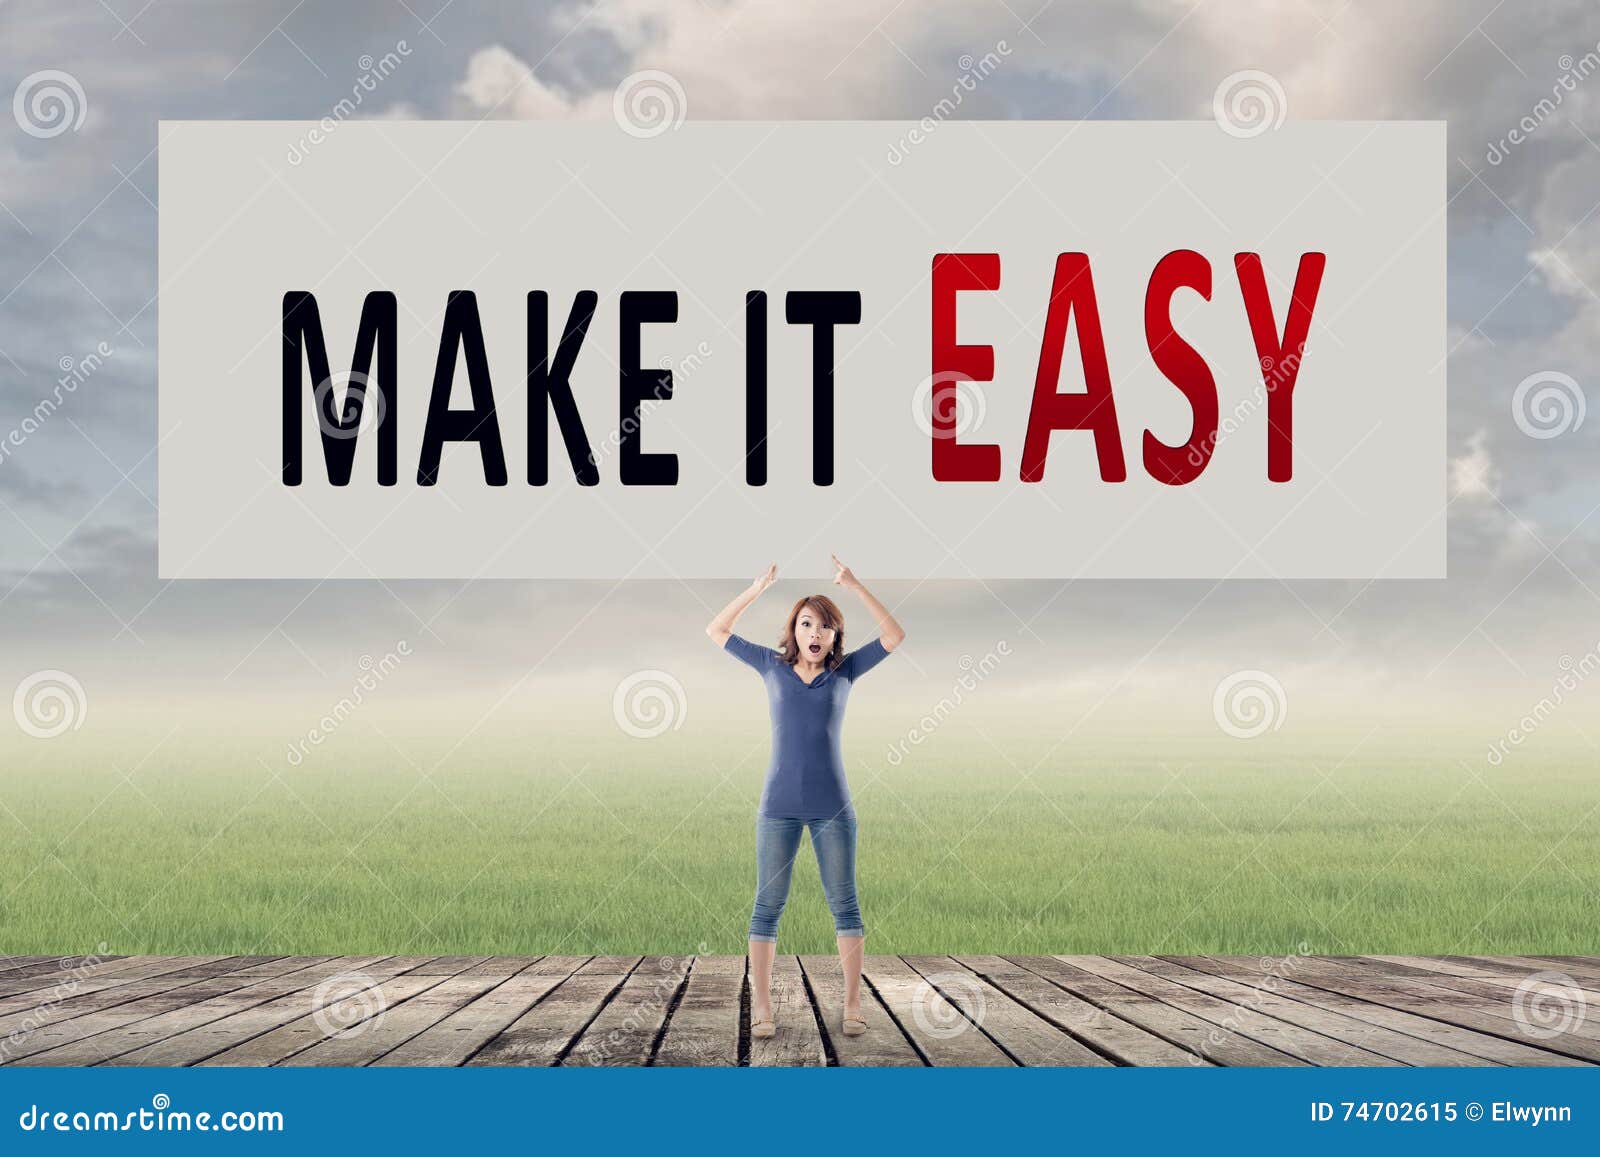 make it easy